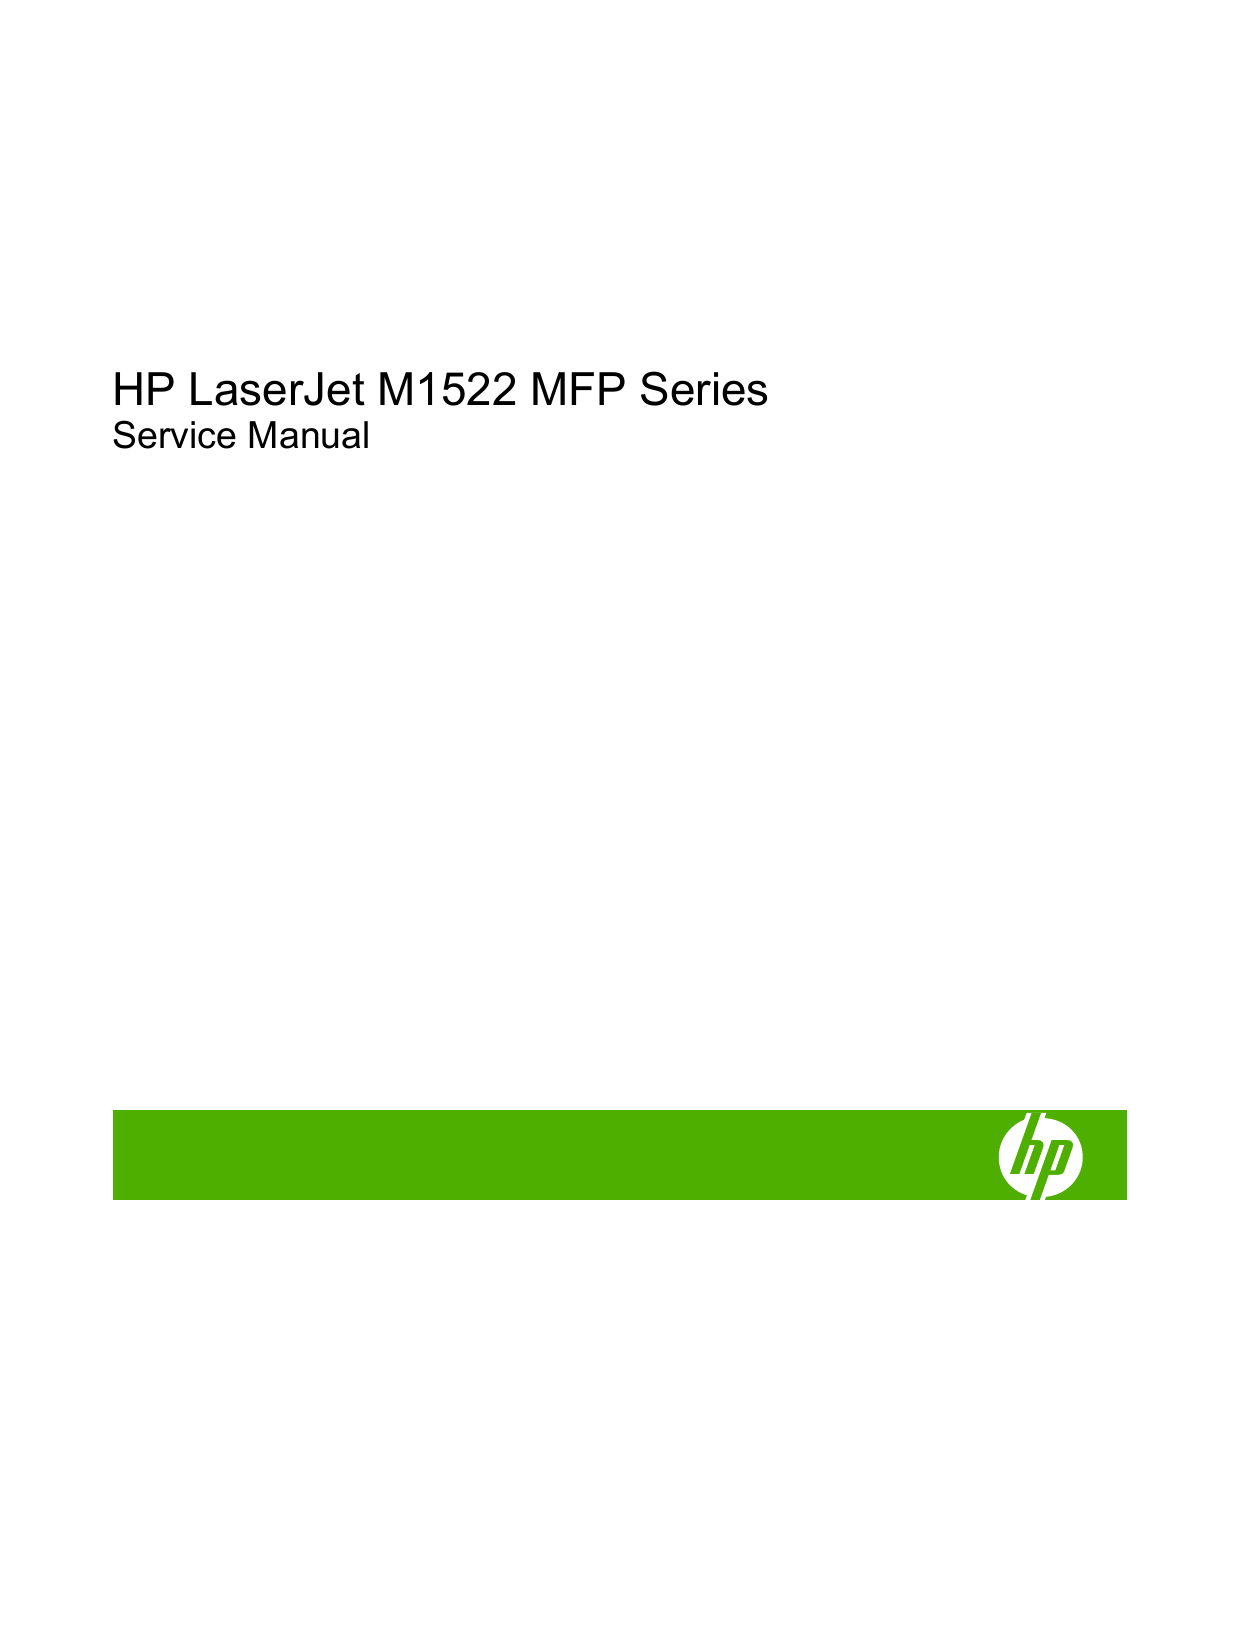 HP LaserJet M1522 MFP service guide Preview image 3